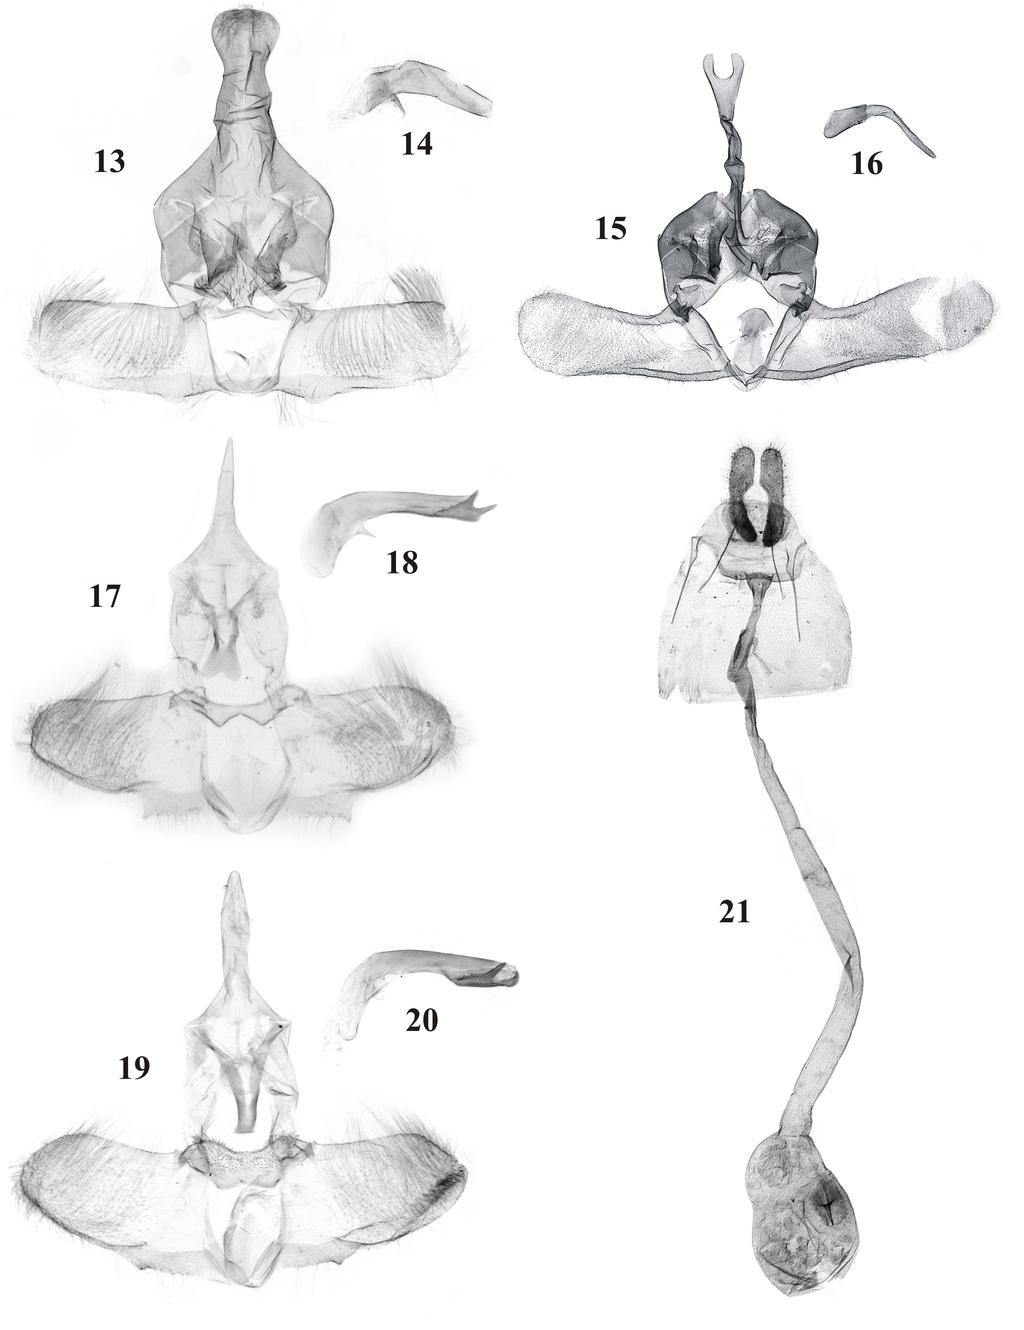 RAZOWSKI J.: Tortricidae (Lepidoptera) from Vietnam 227 Figs 13-21. Male and female genitalia: 13, 14 Gnorismoneura brunneochroa sp. n.